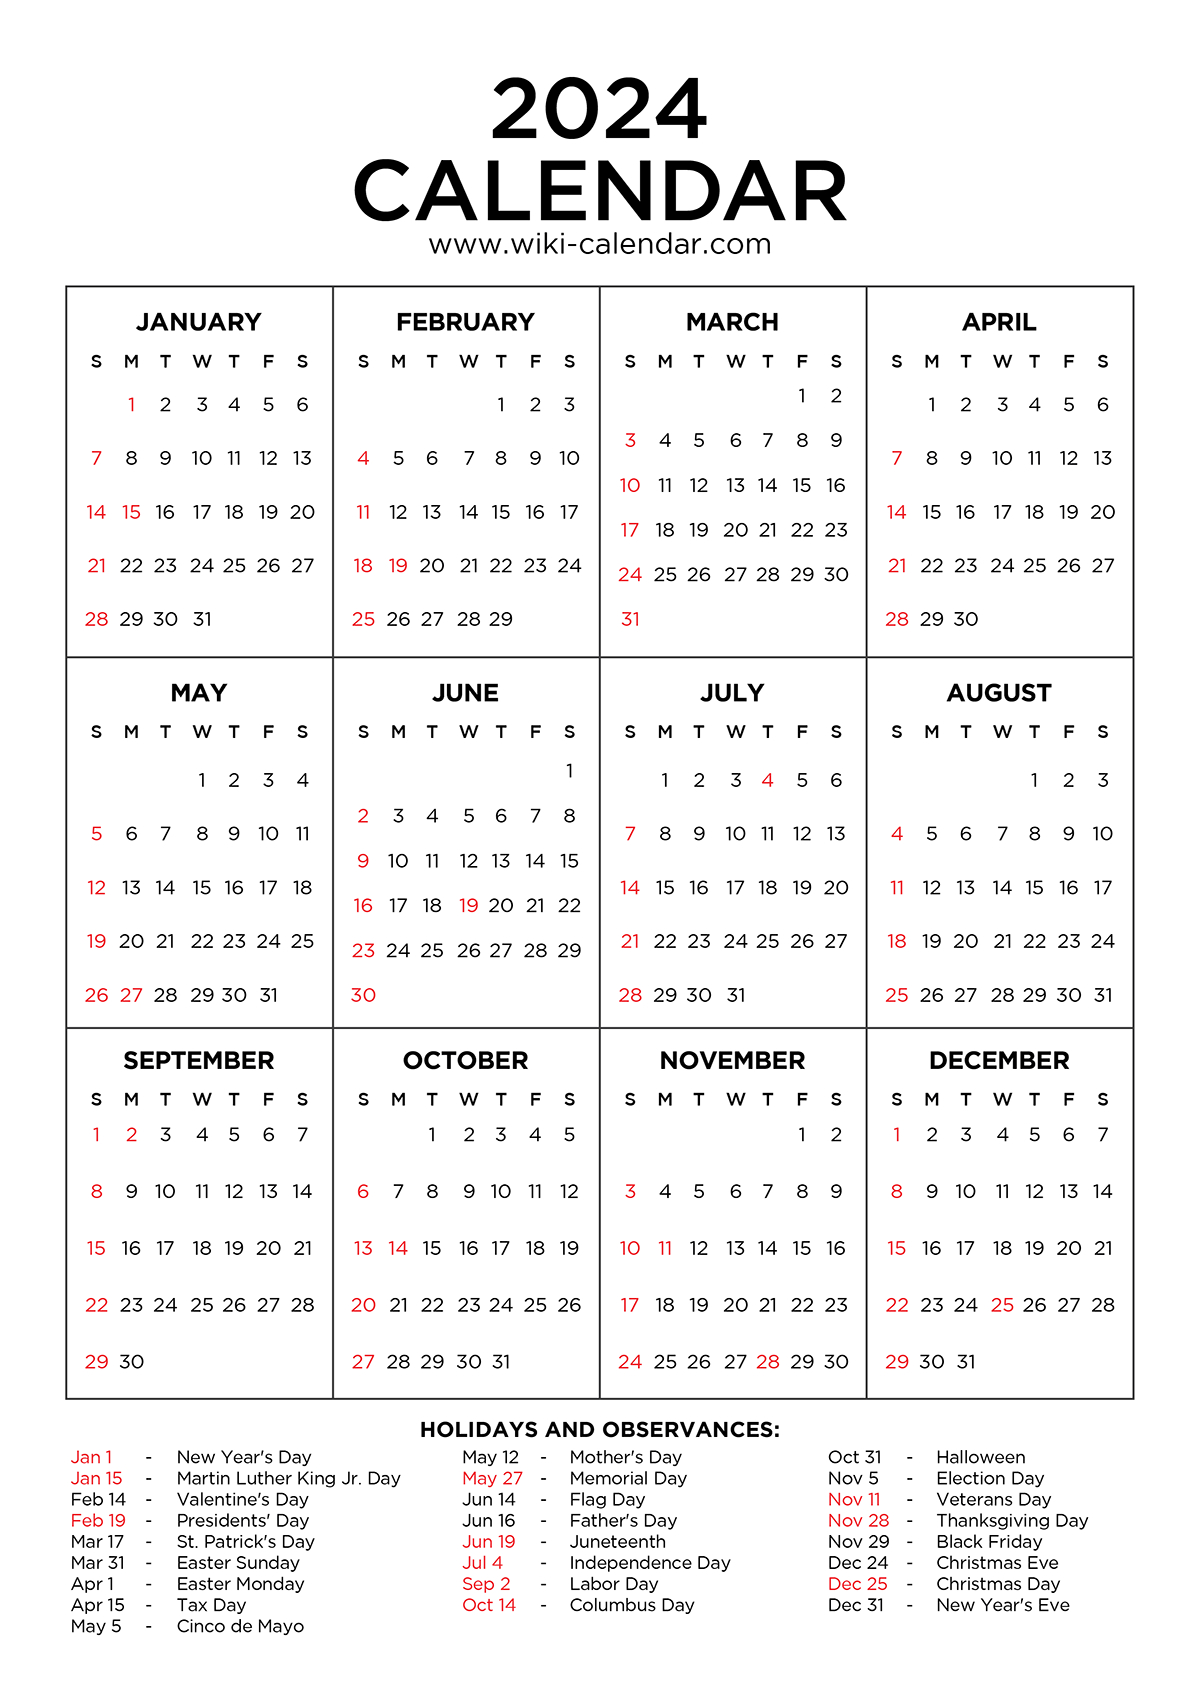 Year 2024 Calendar Printable With Holidays - Wiki Calendar | Printable 2024 Calendar With Holidays Listed